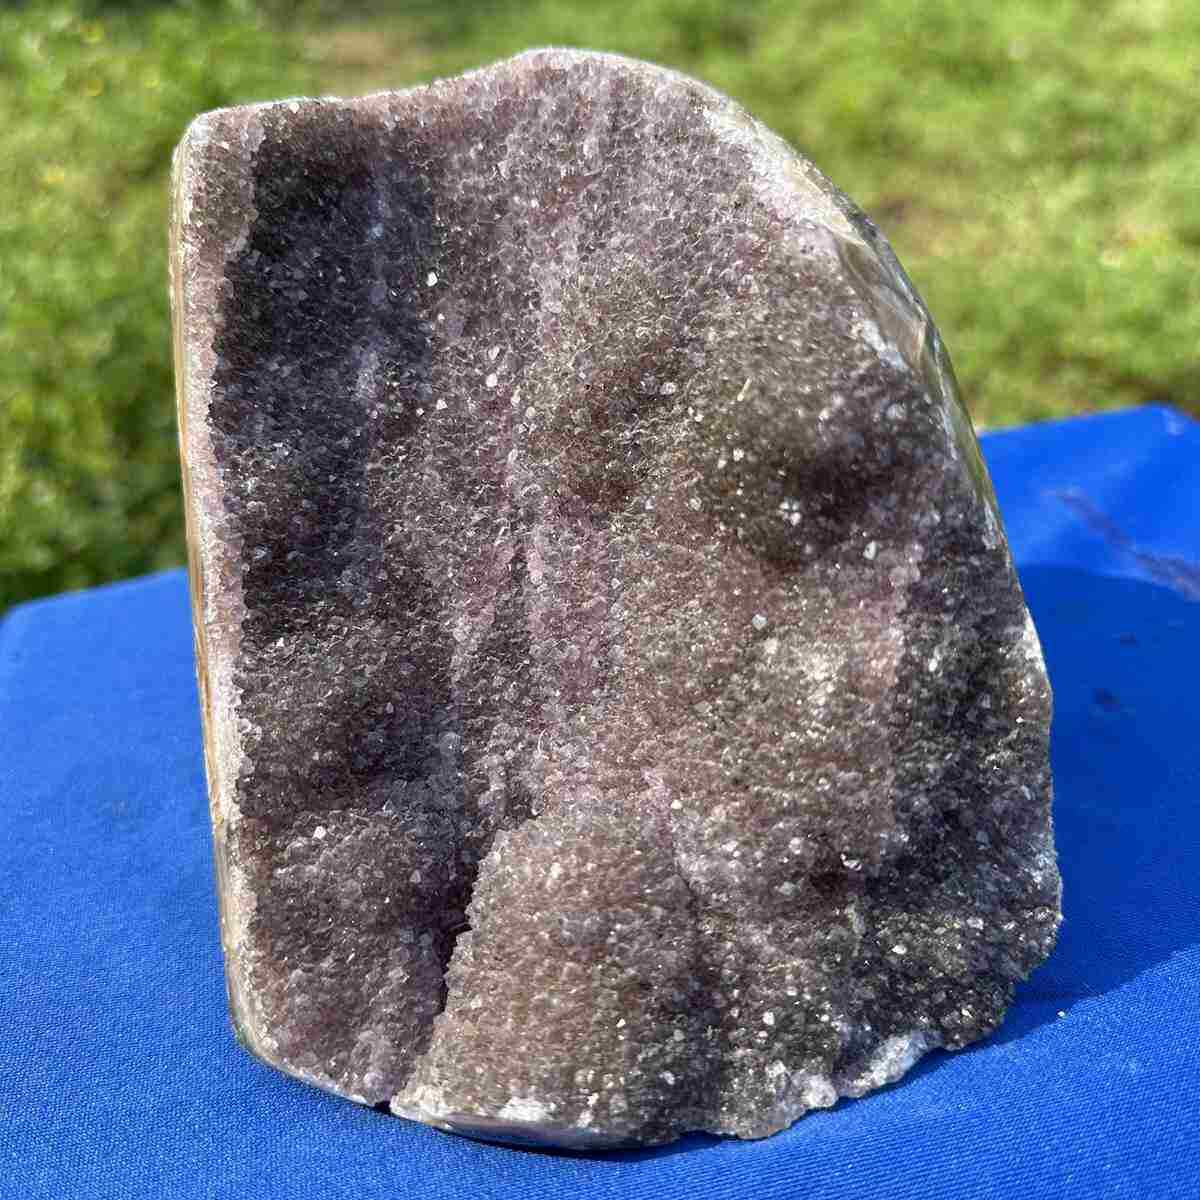 1905g Natural Amethyst Geode Quartz Energy Crystal Mineral Specimen Reiki Decor 